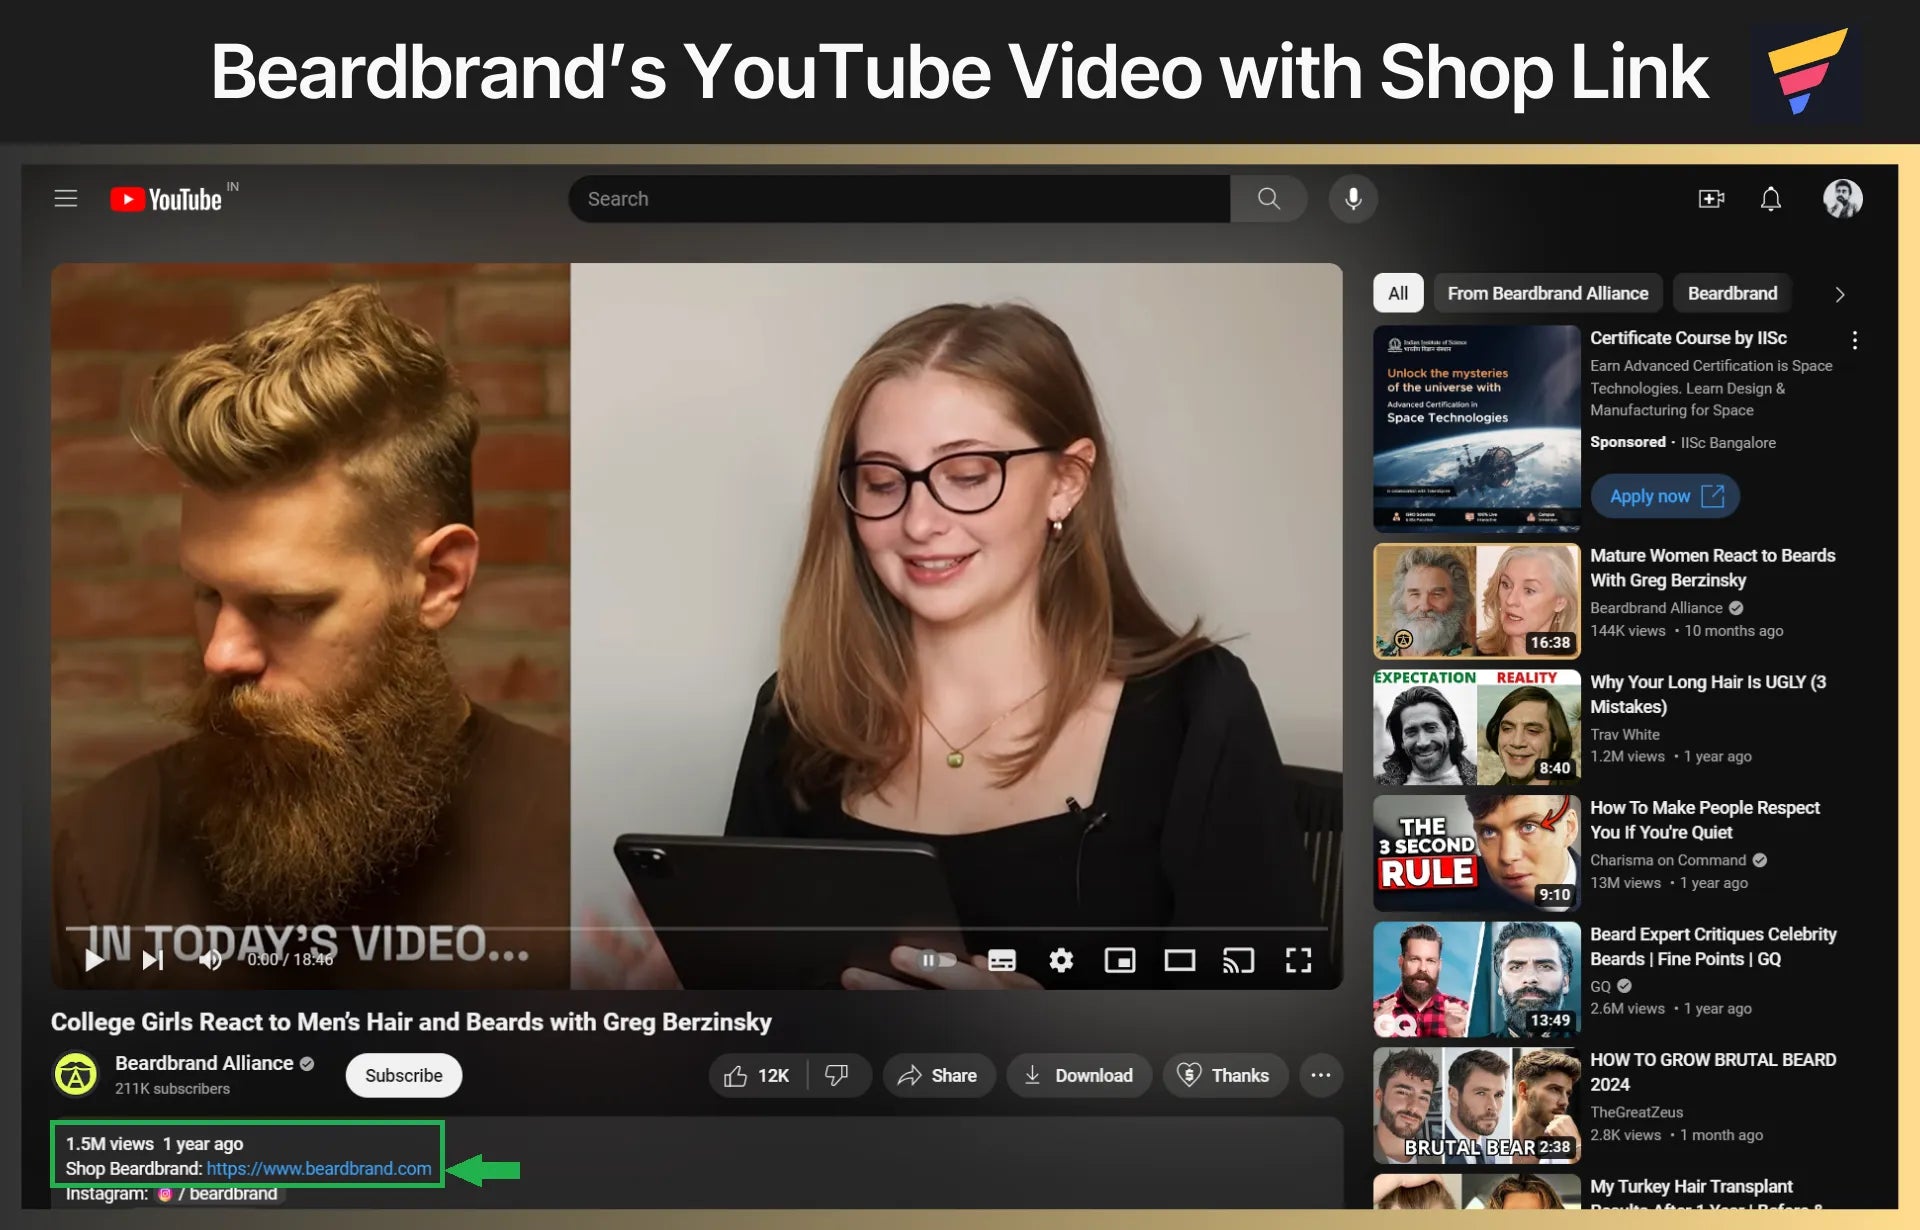 Beardbrand’s YouTube Video with Shop Link